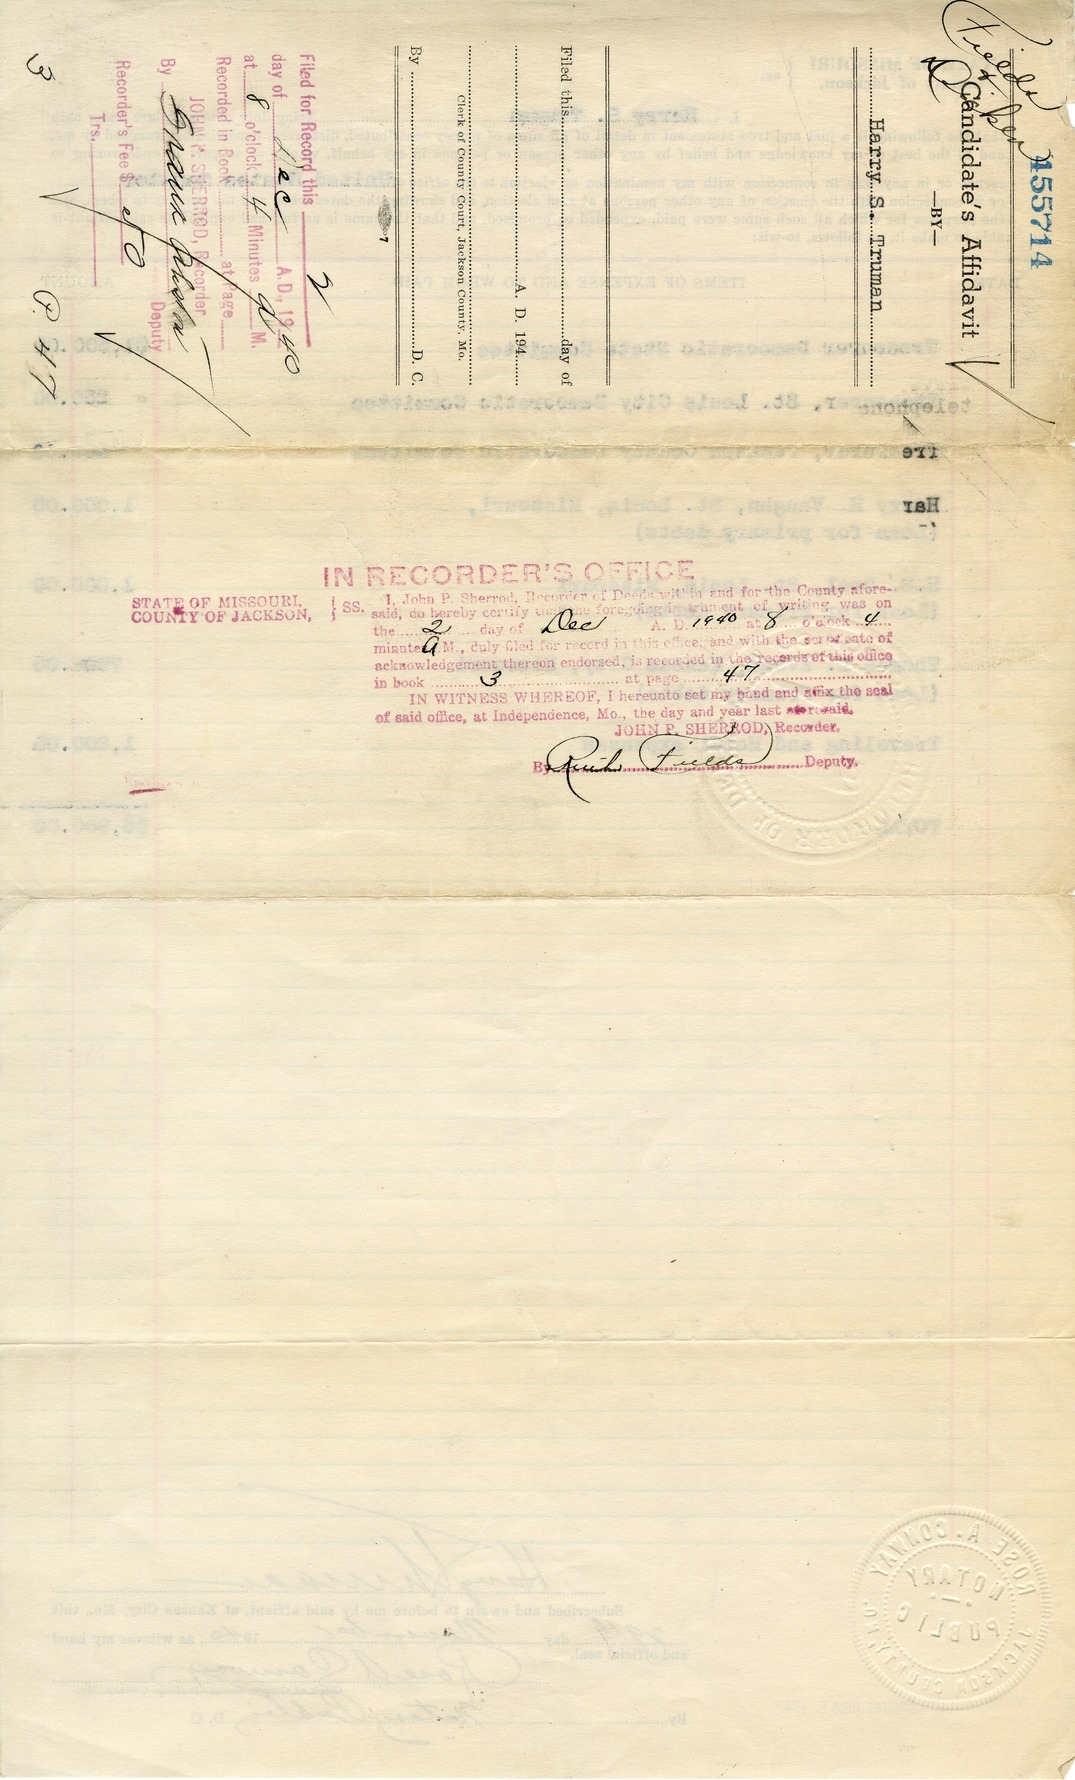 Candidate's Affidavit of Senator Harry S. Truman